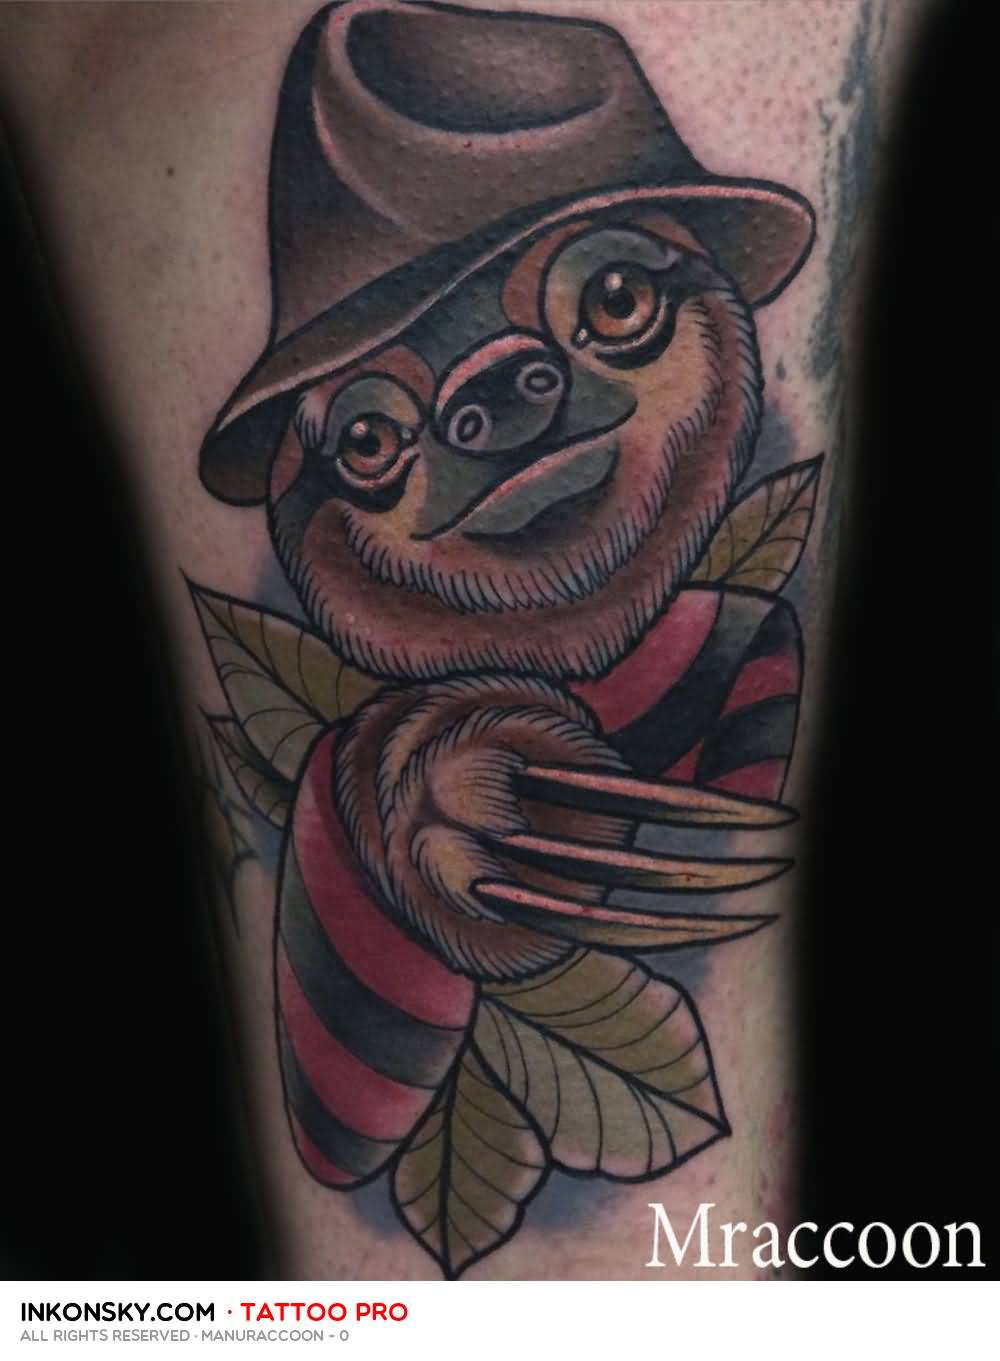 Lovely Raccoon In Freddy Krueger Style Traditional Tattoo.